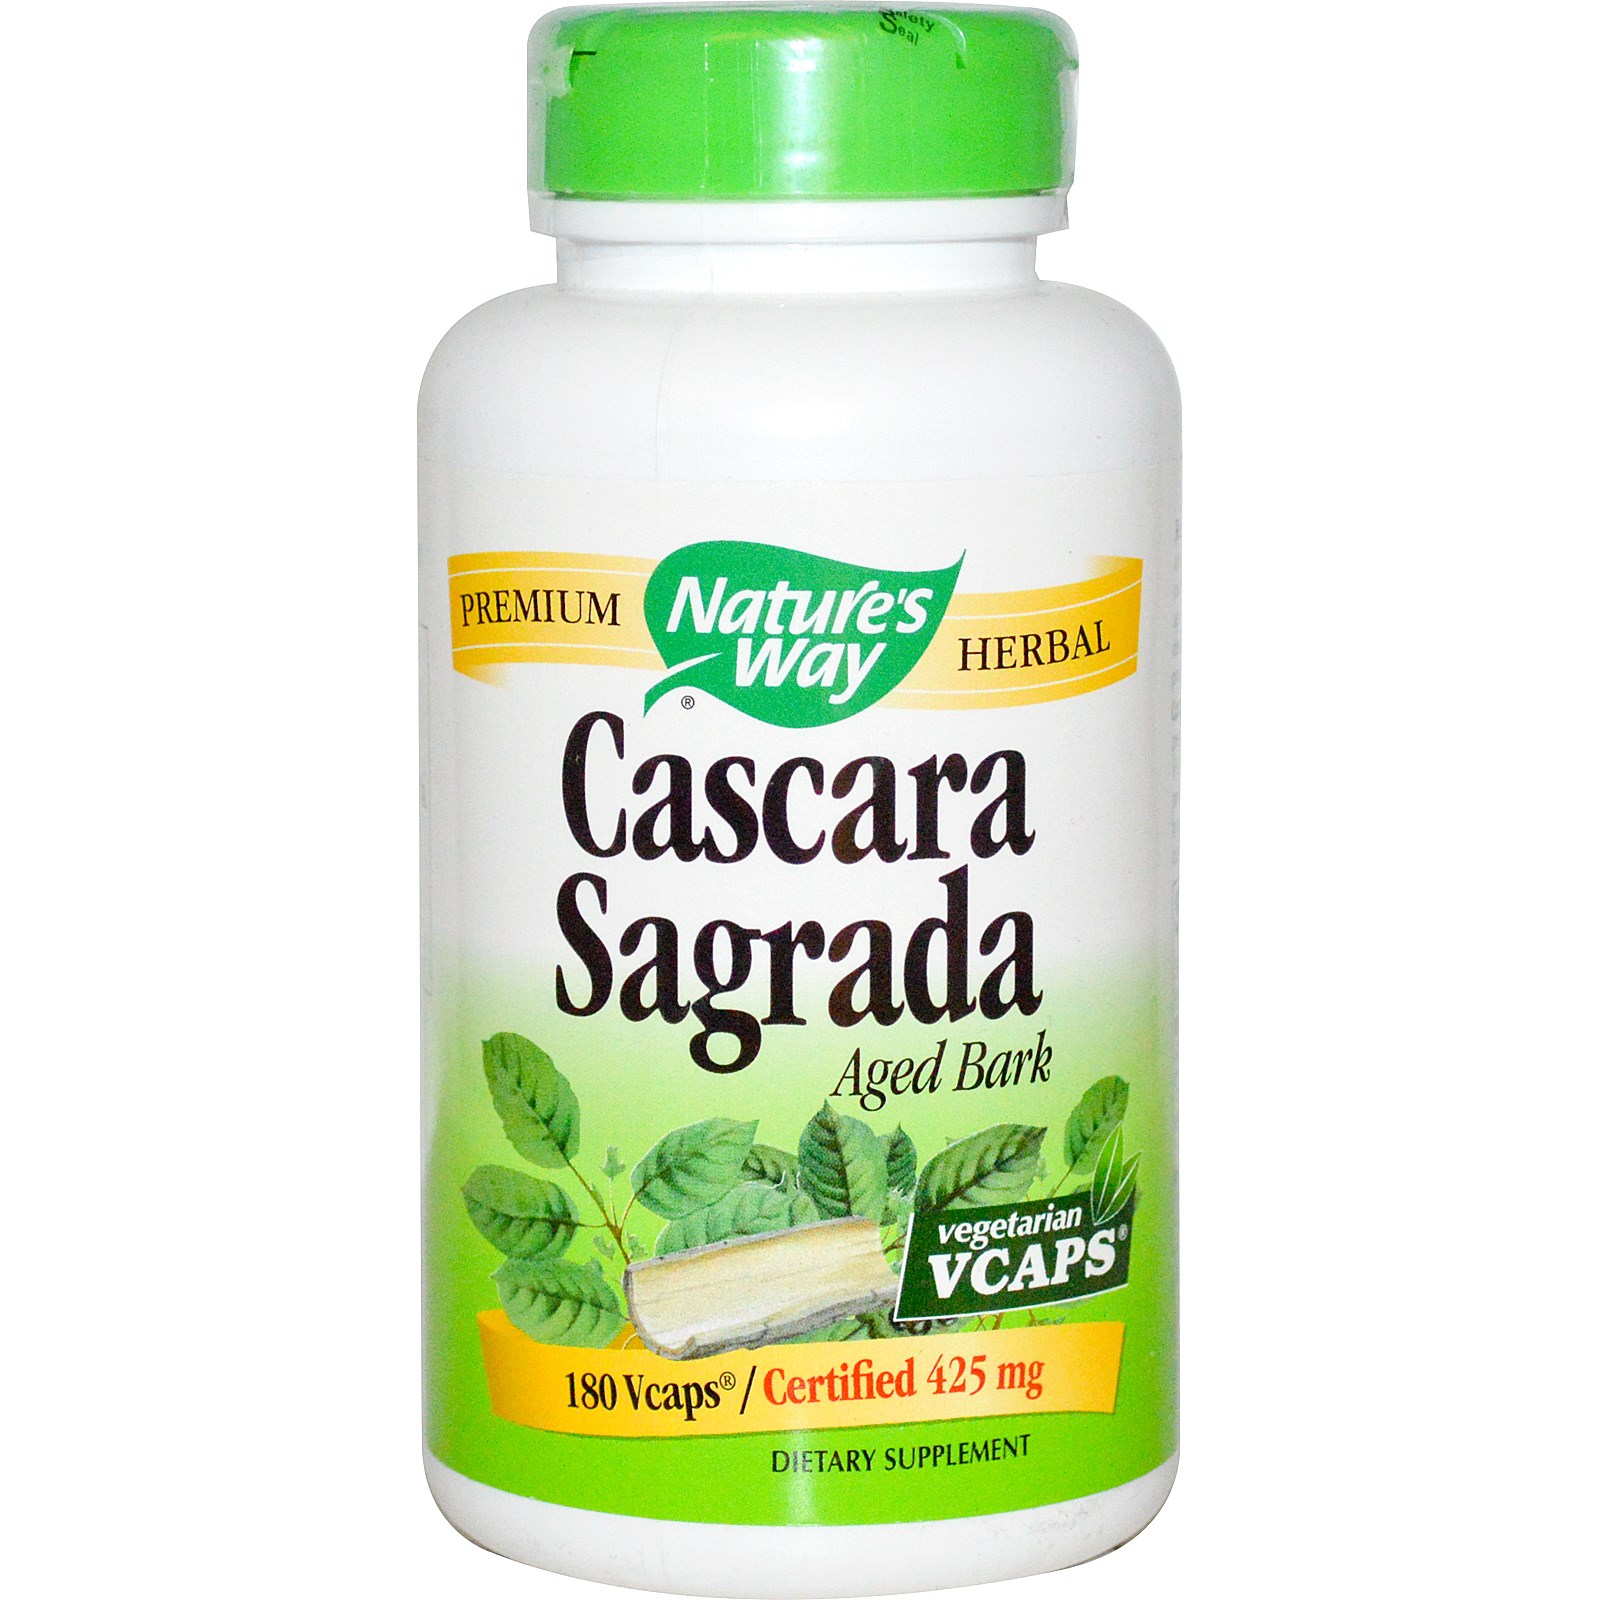 Benefits of Cascara Sagrada Supplements